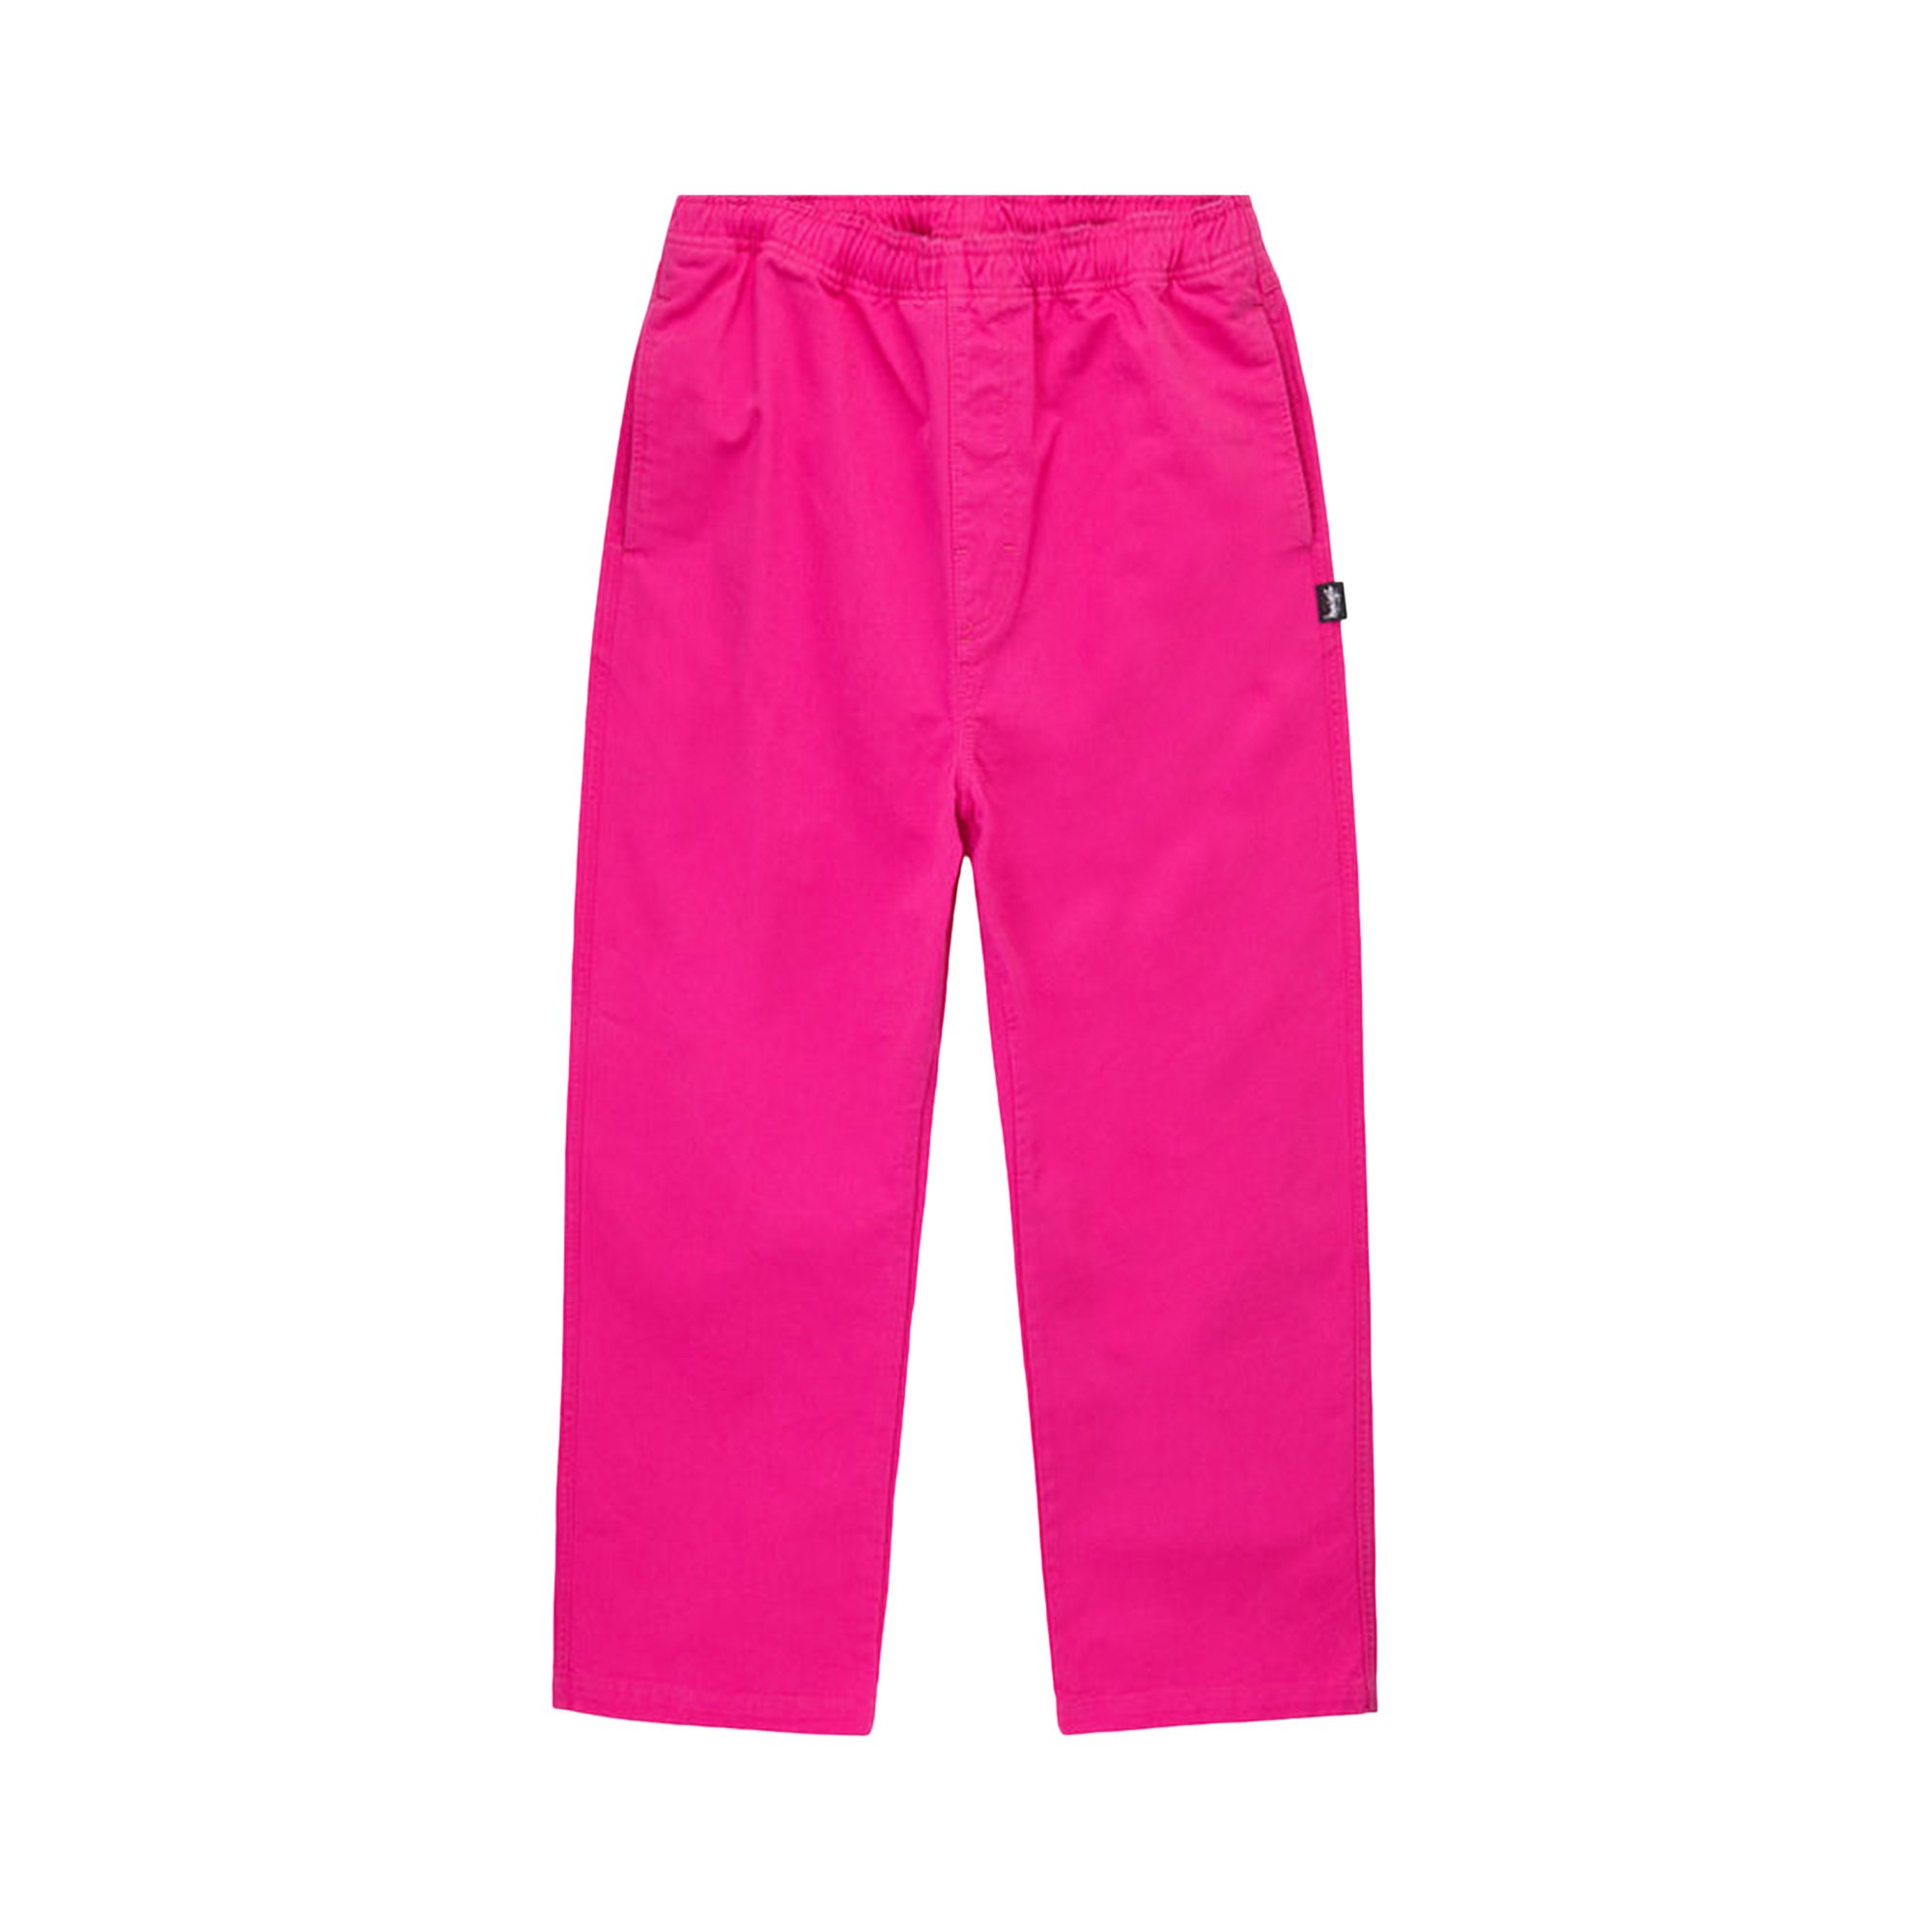 Buy Stussy Brushed Beach Pant 'Hot Pink' - 116553 HOT | GOAT